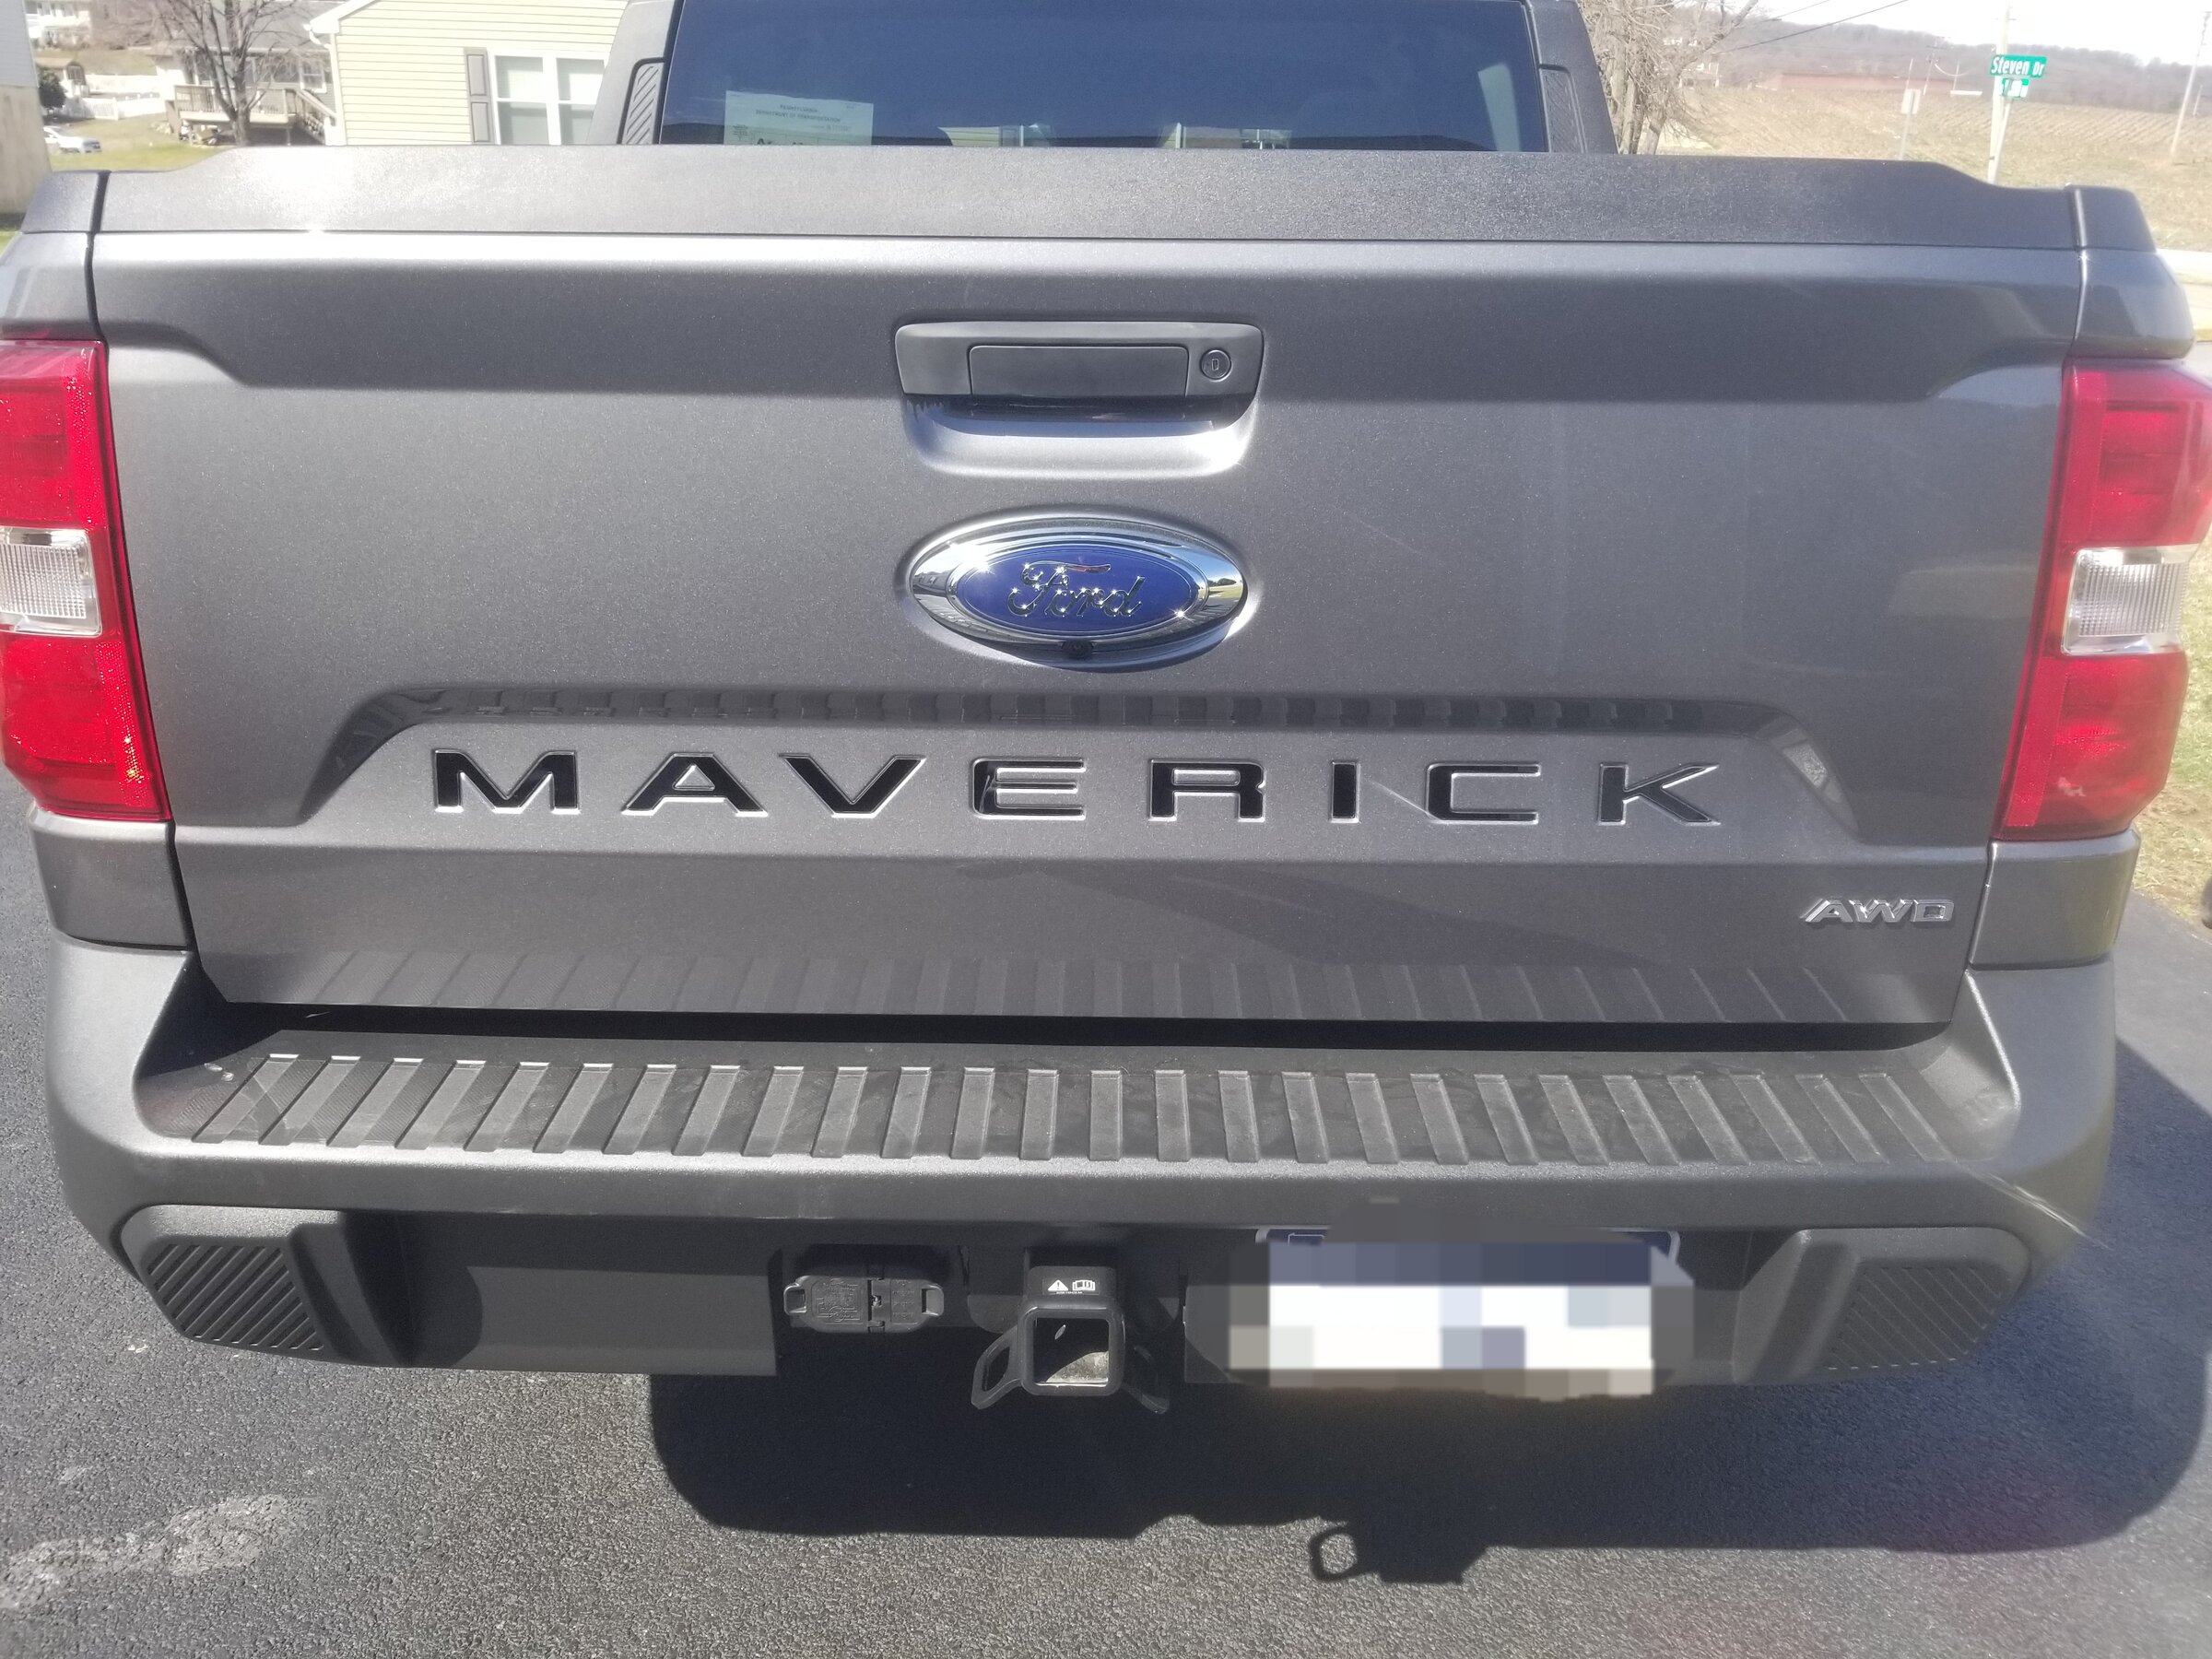 Ford Maverick Tailgate Lettering Color? 20220315_170516